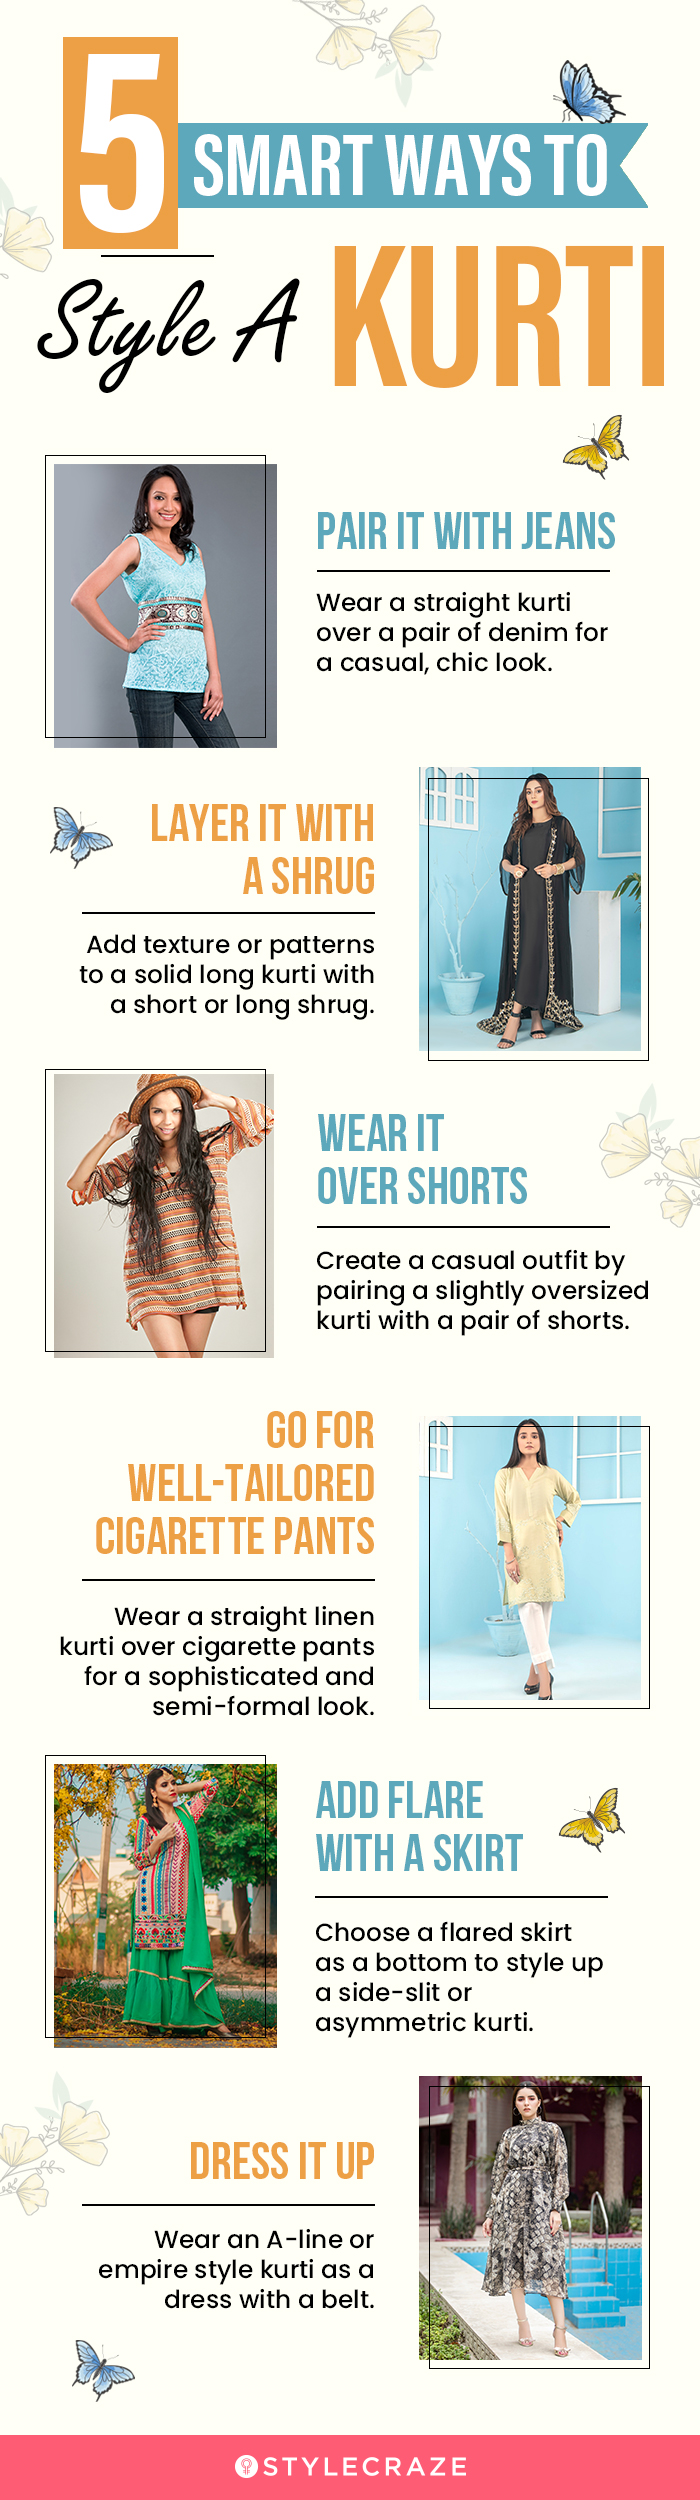 5 smart ways to style a kurti (infographic)